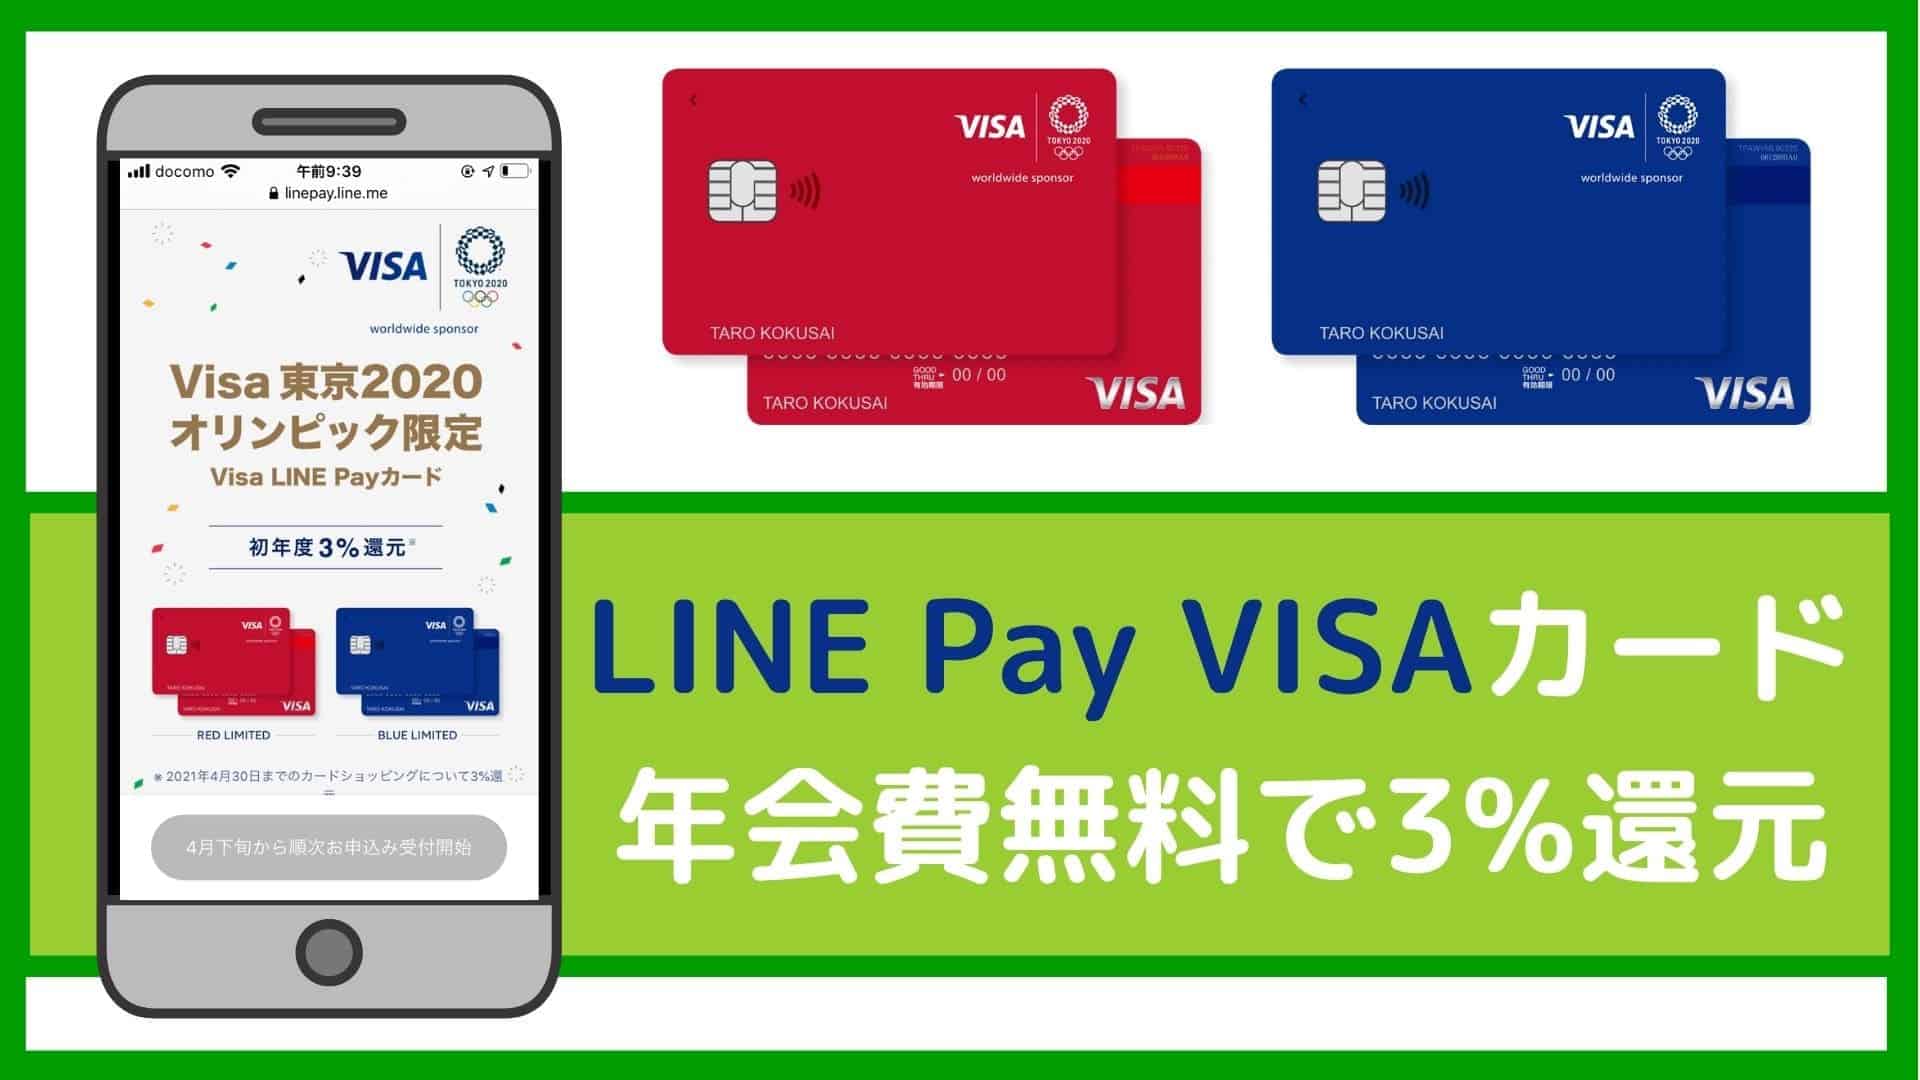 Visa line pay